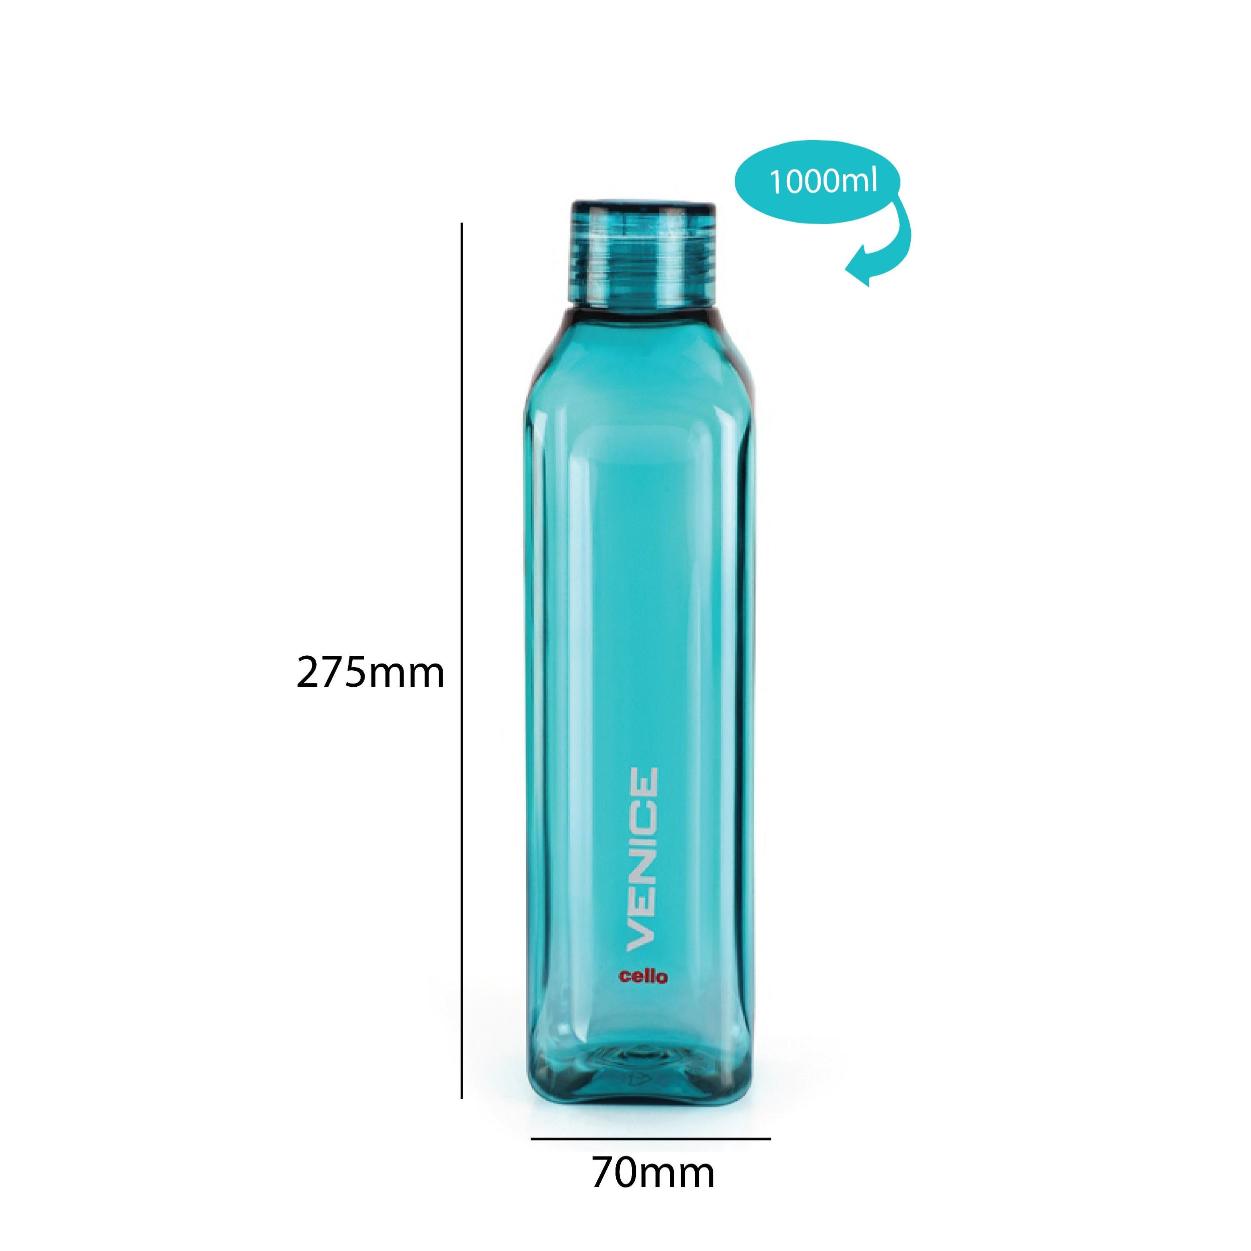 Venice Plastic Water Bottle, 1000ml, Set of 5 Assorted / 1000ml / 5 Pieces